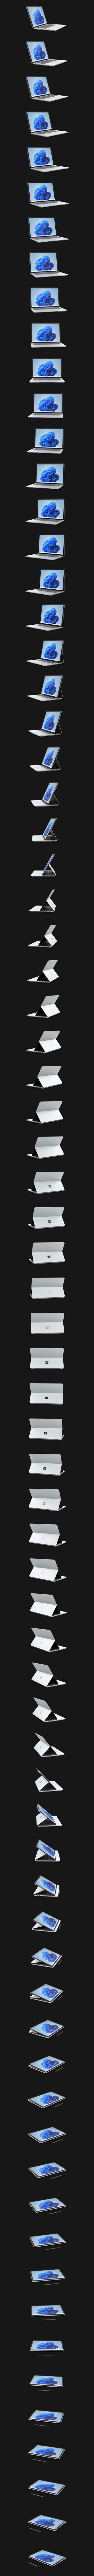 Surface Laptop Studio a rodar a 360 graus.